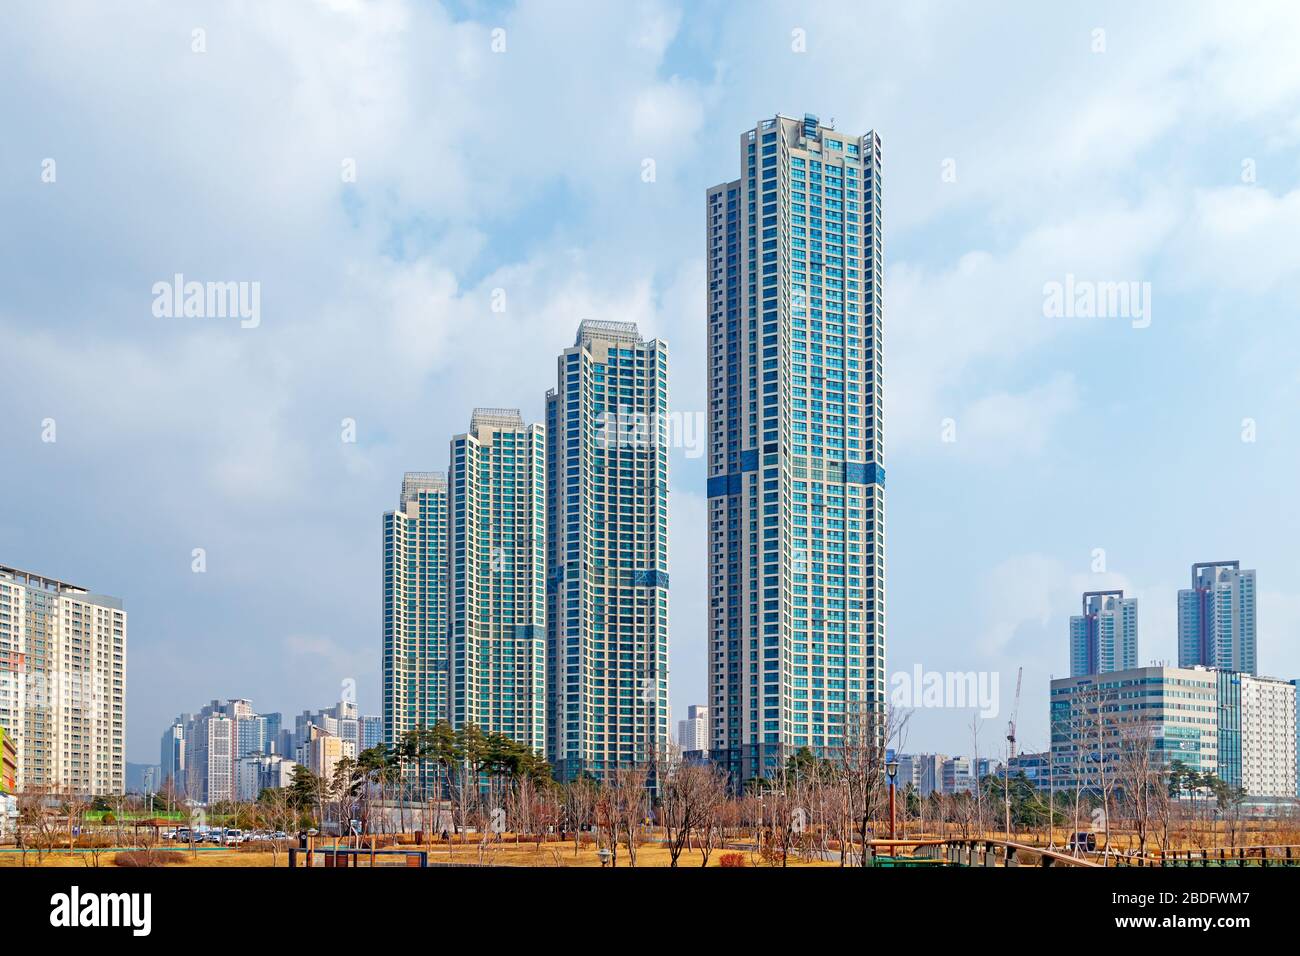 Incheon Cheongna International Cityscape. Apartment complex landscape. Korea Residential Complex. Stock Photo